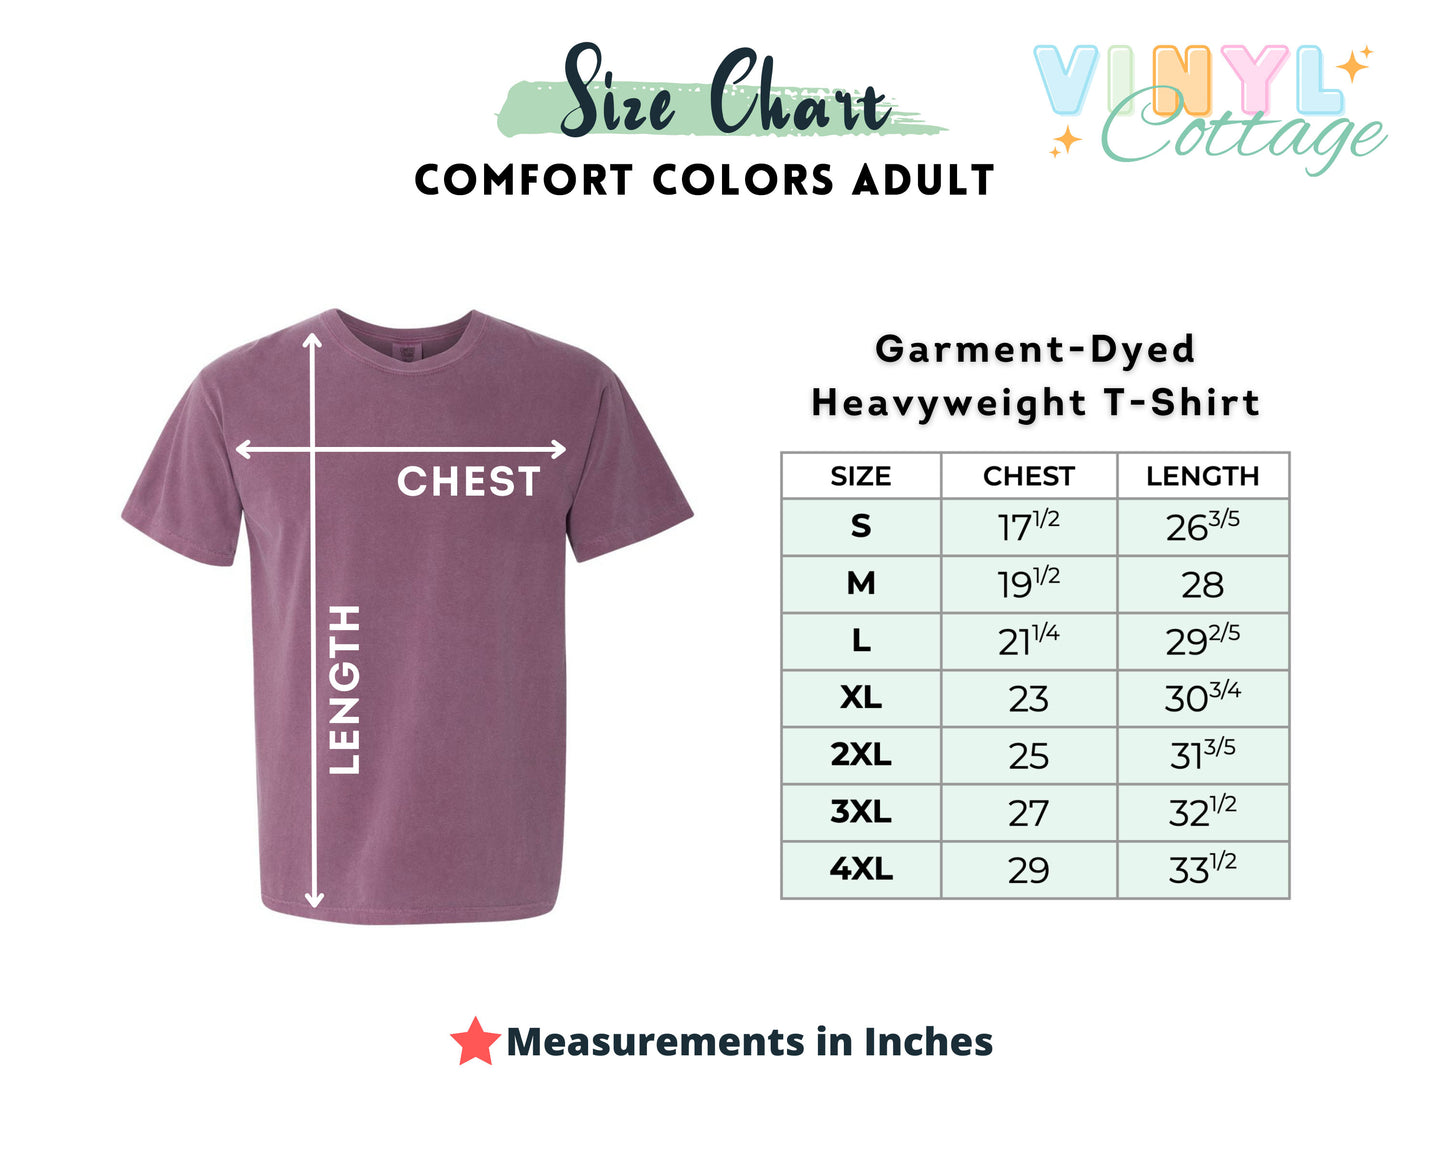 Custom Shirt ~ Adult Comfort Colors ~ Short Sleeve